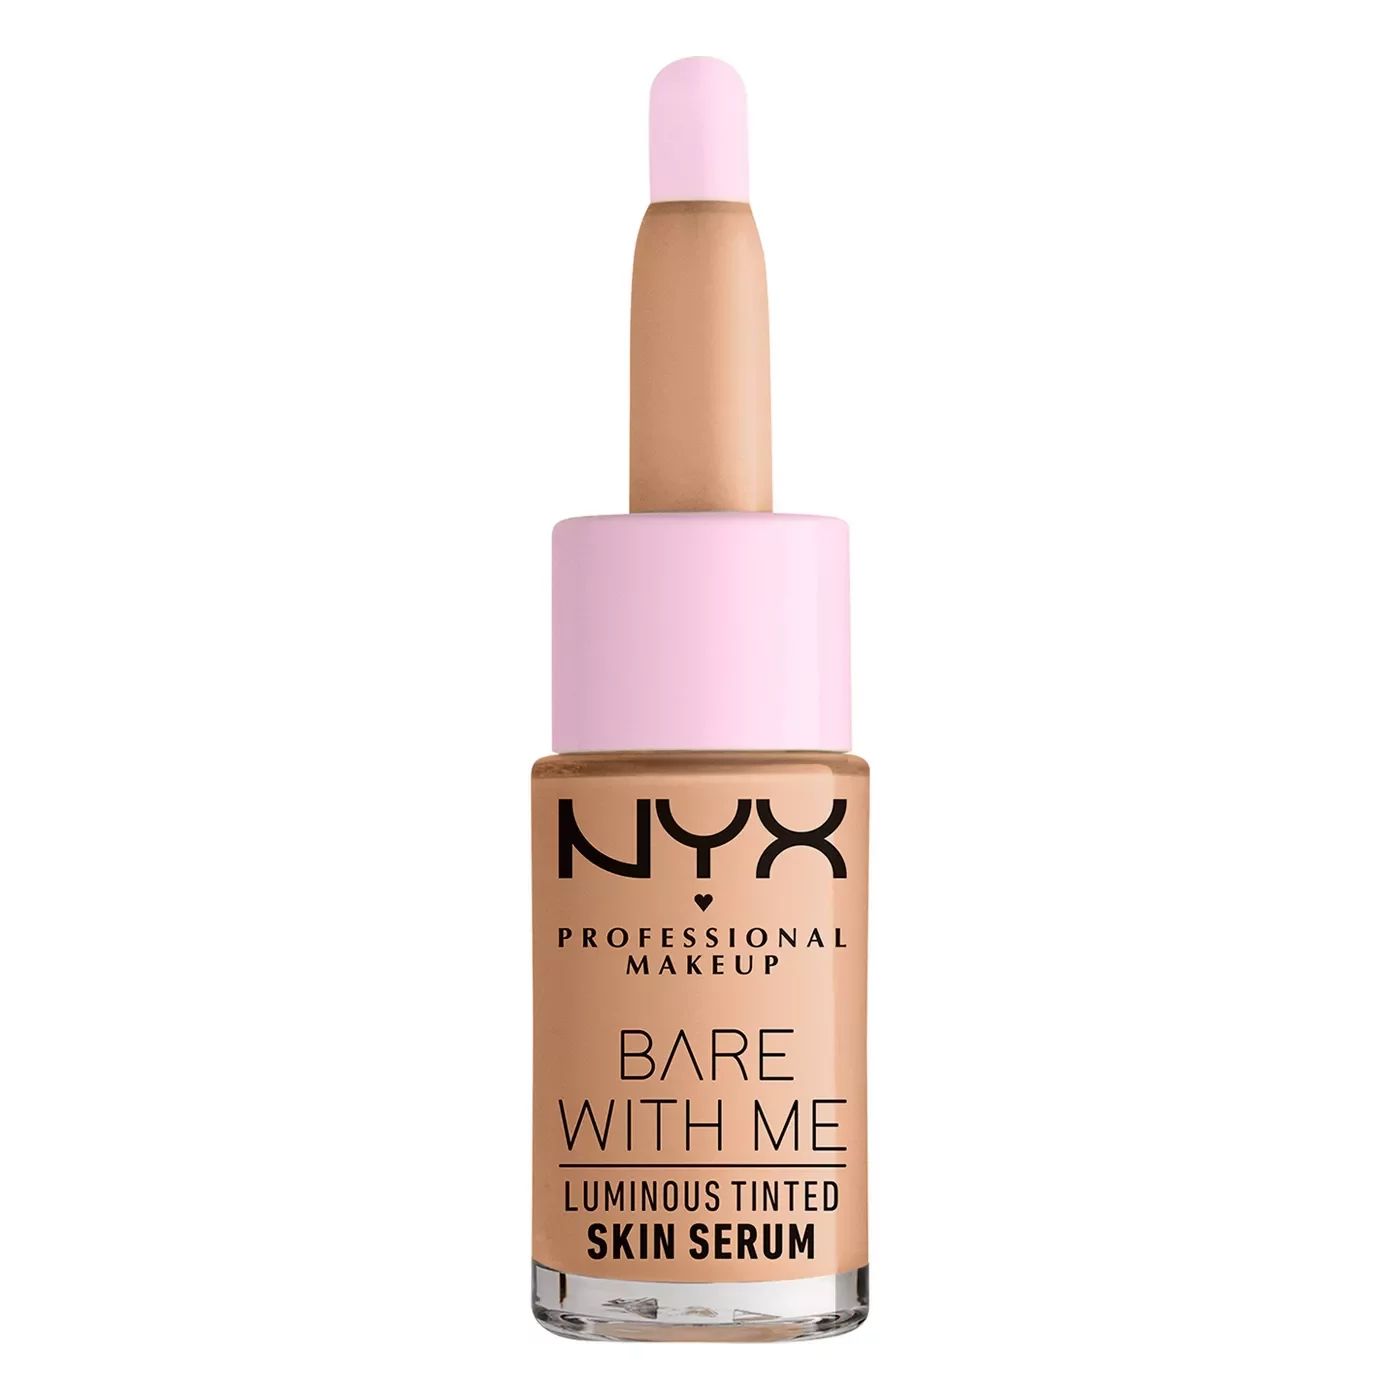 NYX Professional Makeup Bare with Me Luminous Tinted Skin Serum Univeral Light Medium | Walmart (US)